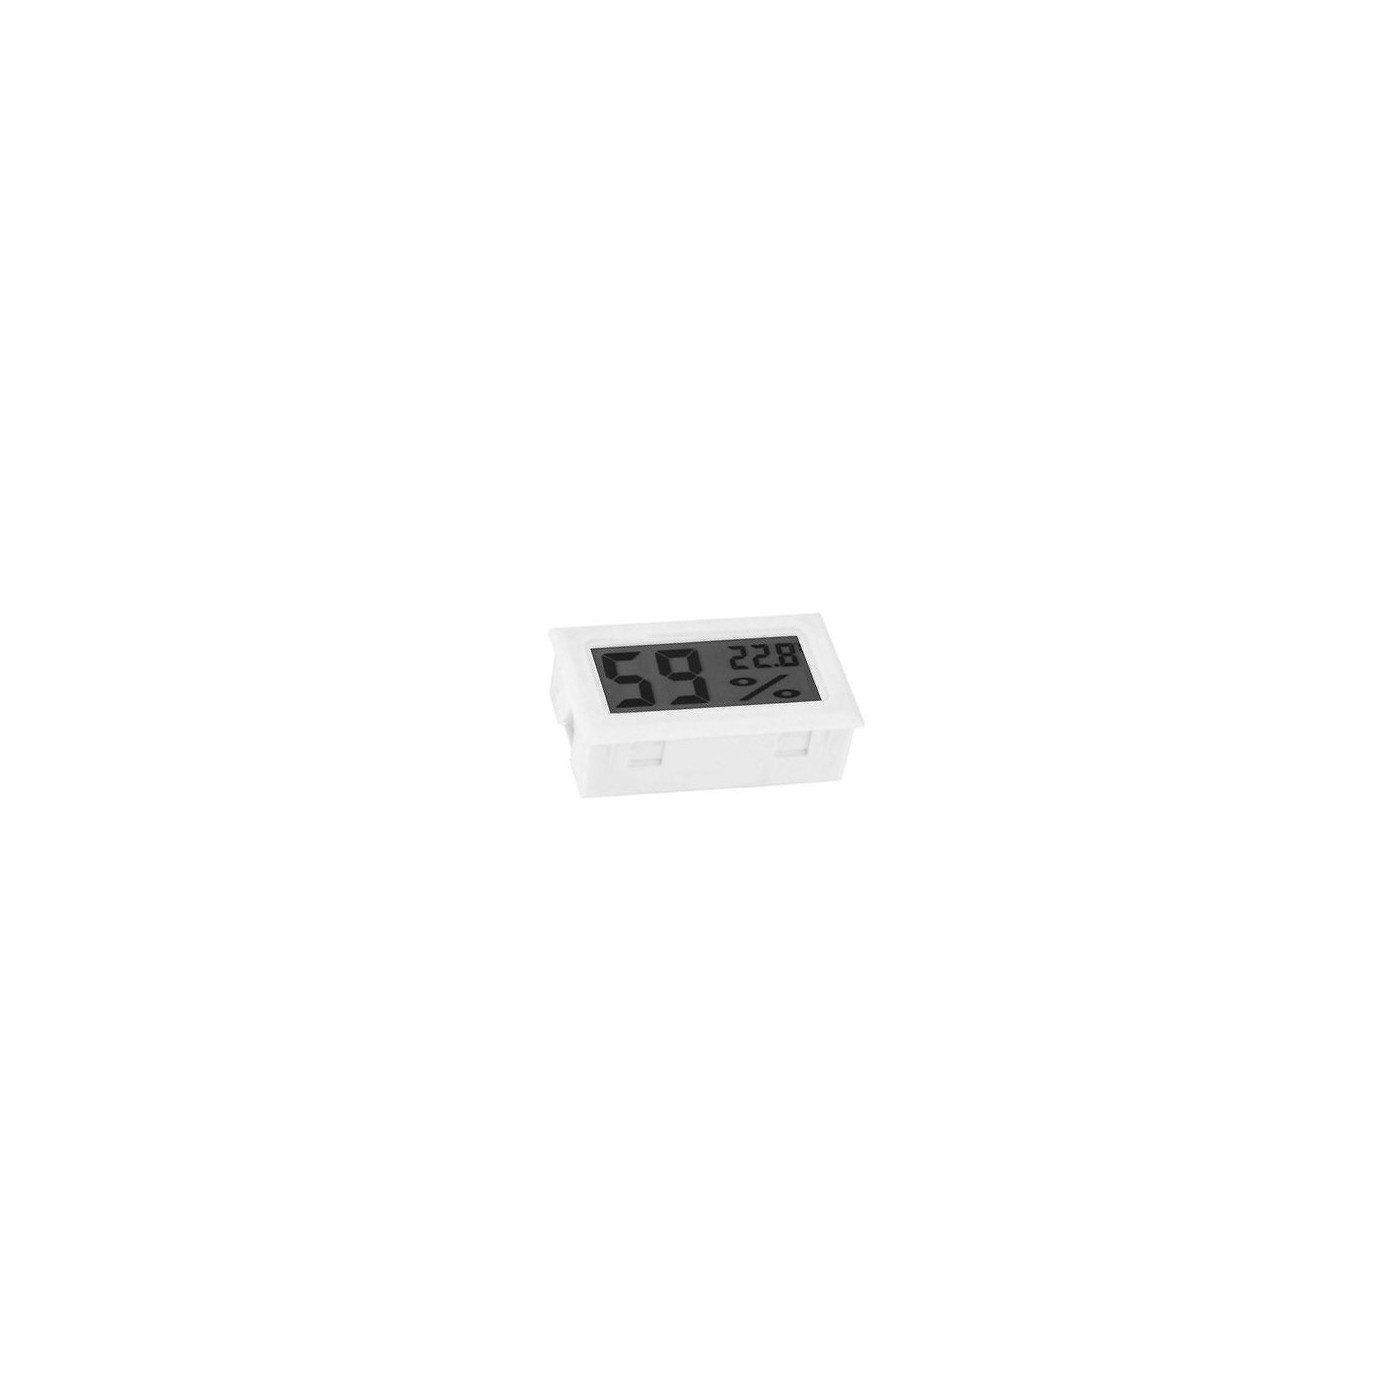 Medidor de temperatura e umidade interno de LCD (branco)